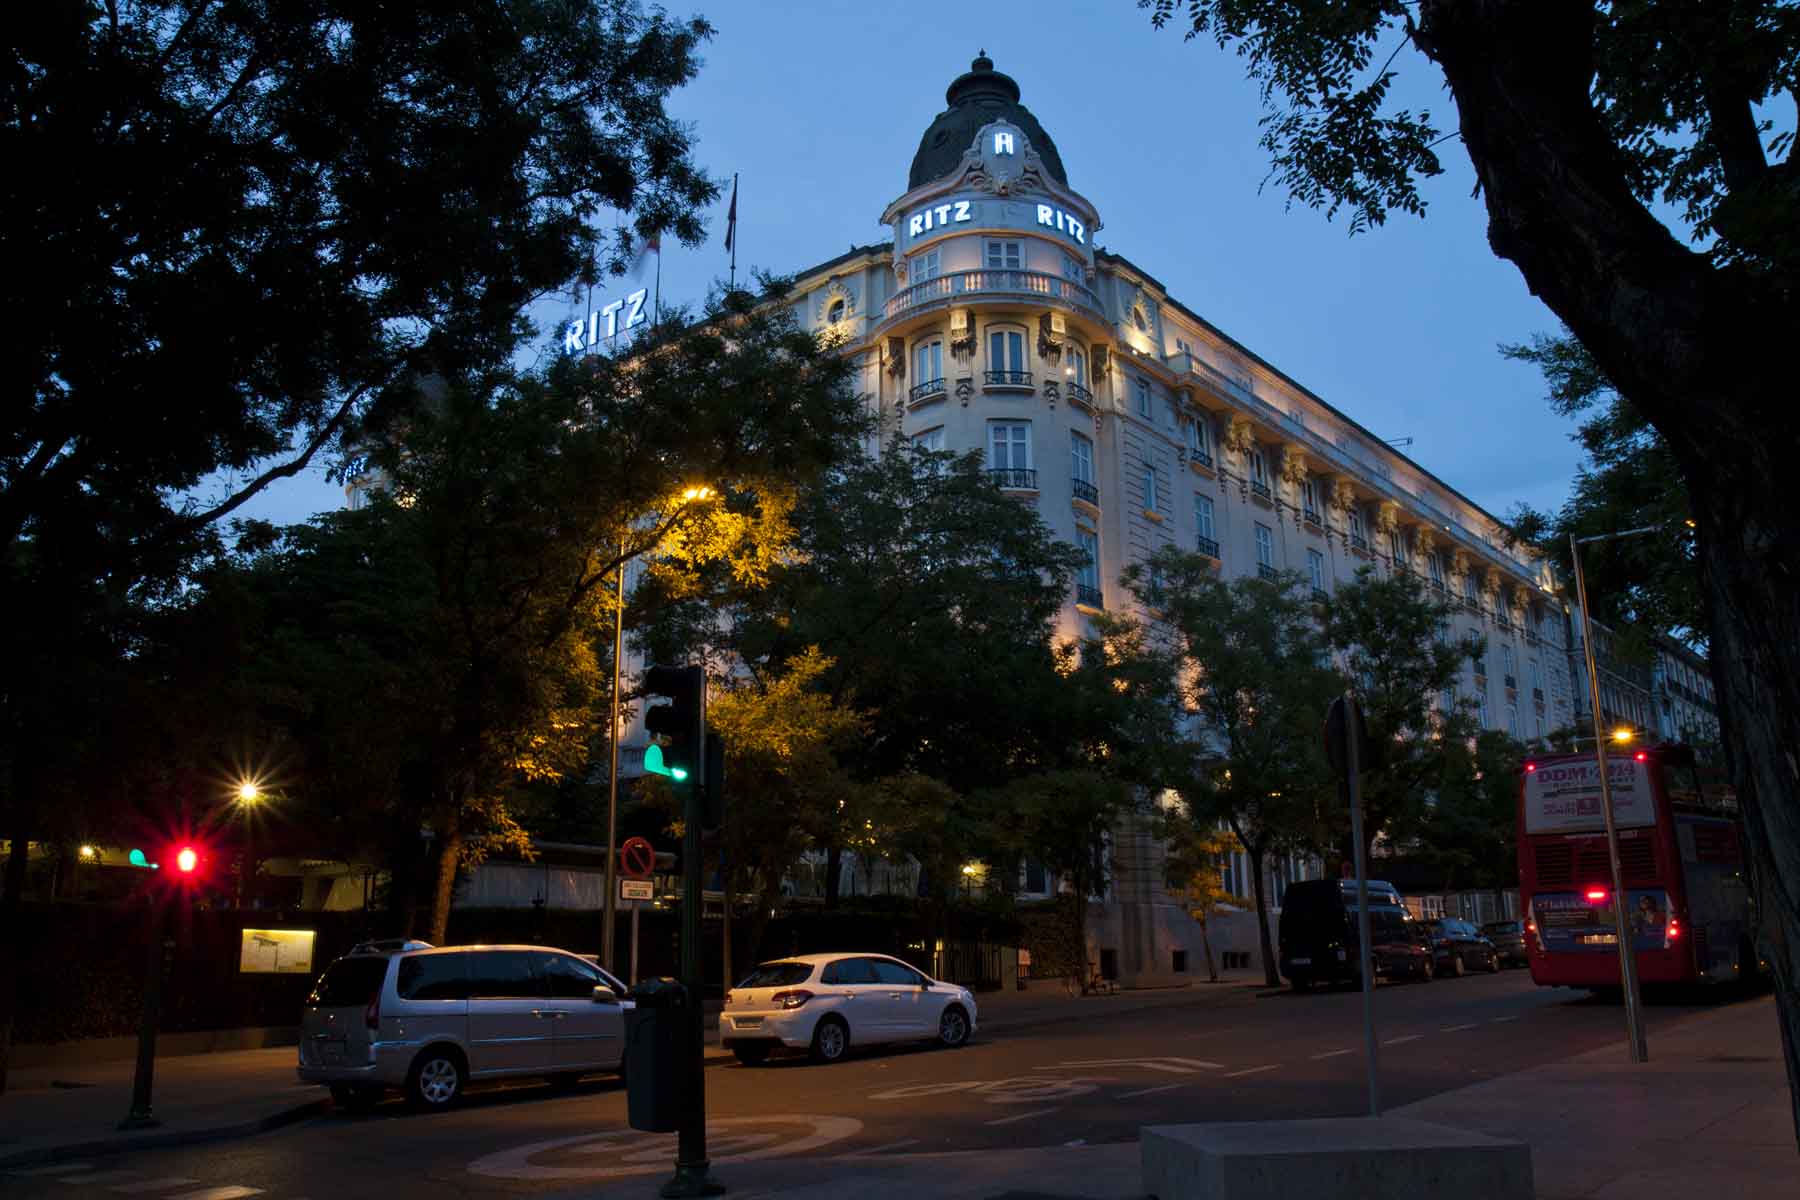 Corner view of the Hotel Ritz Madrid, evening